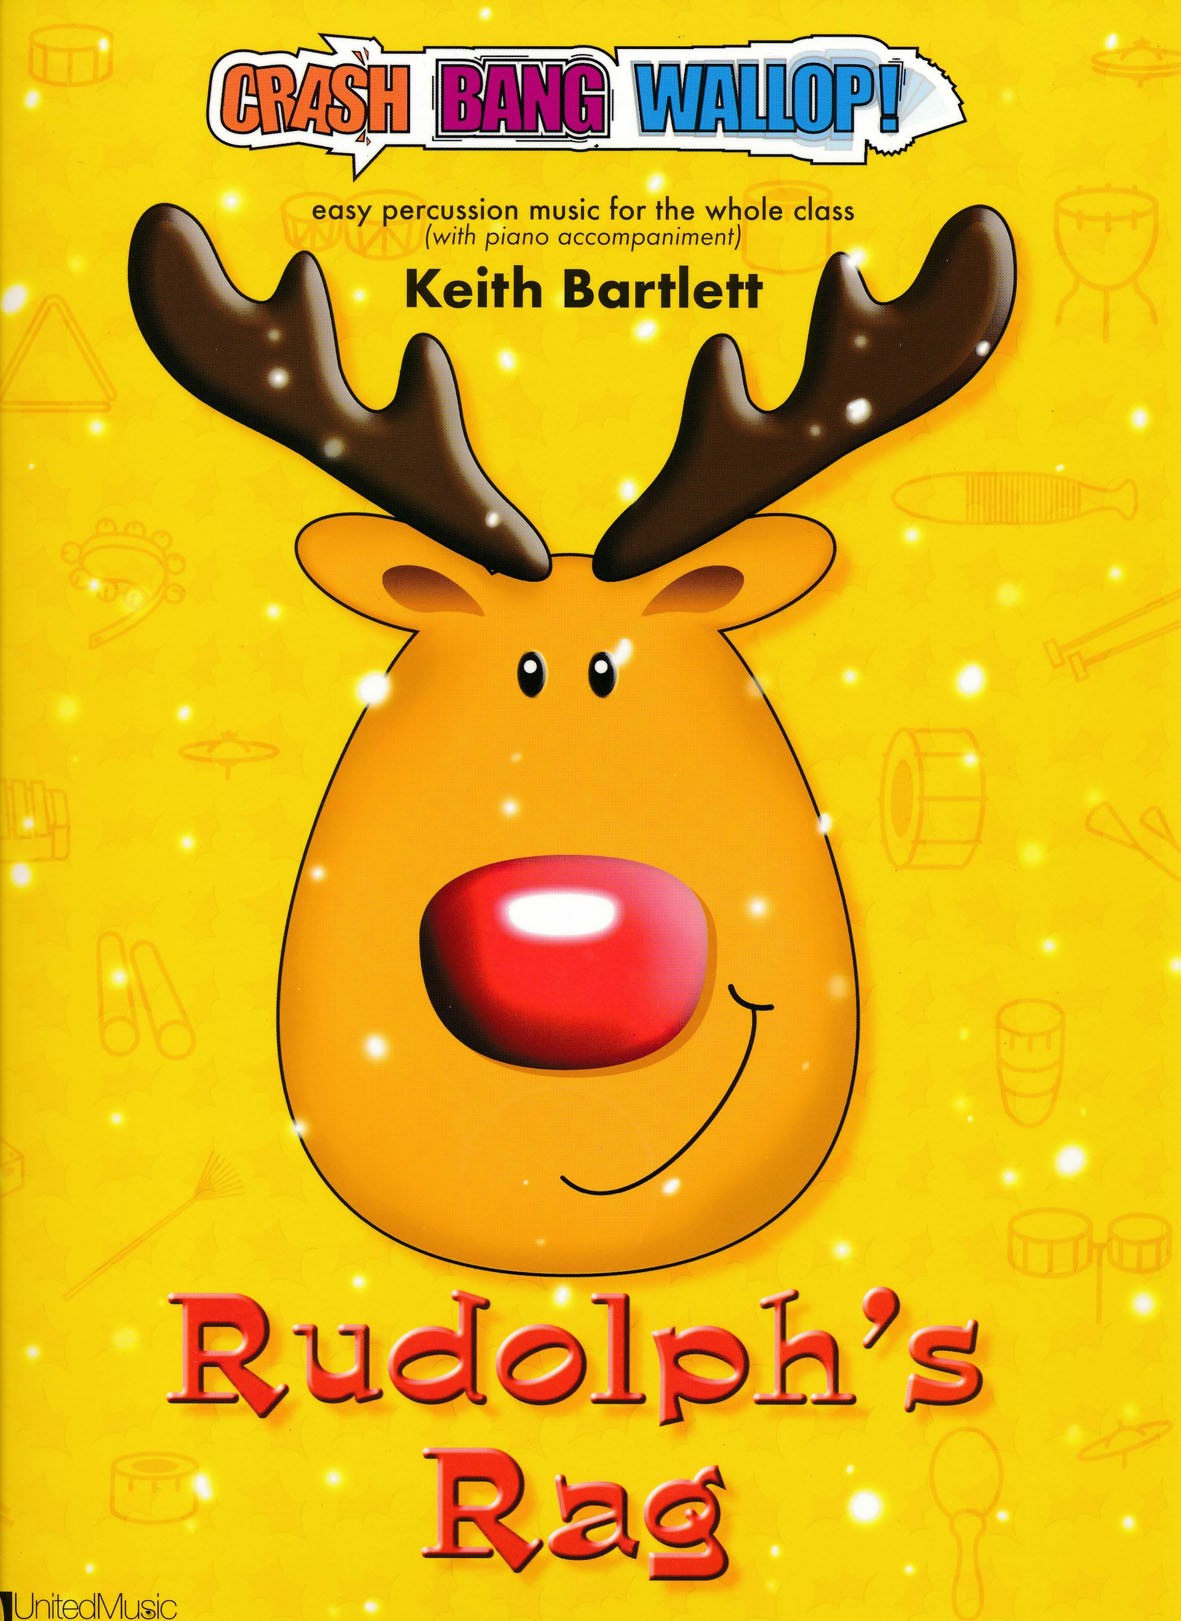 Crash, Bang, Wallop! - Rudolph's Rag by Keith Bartlett